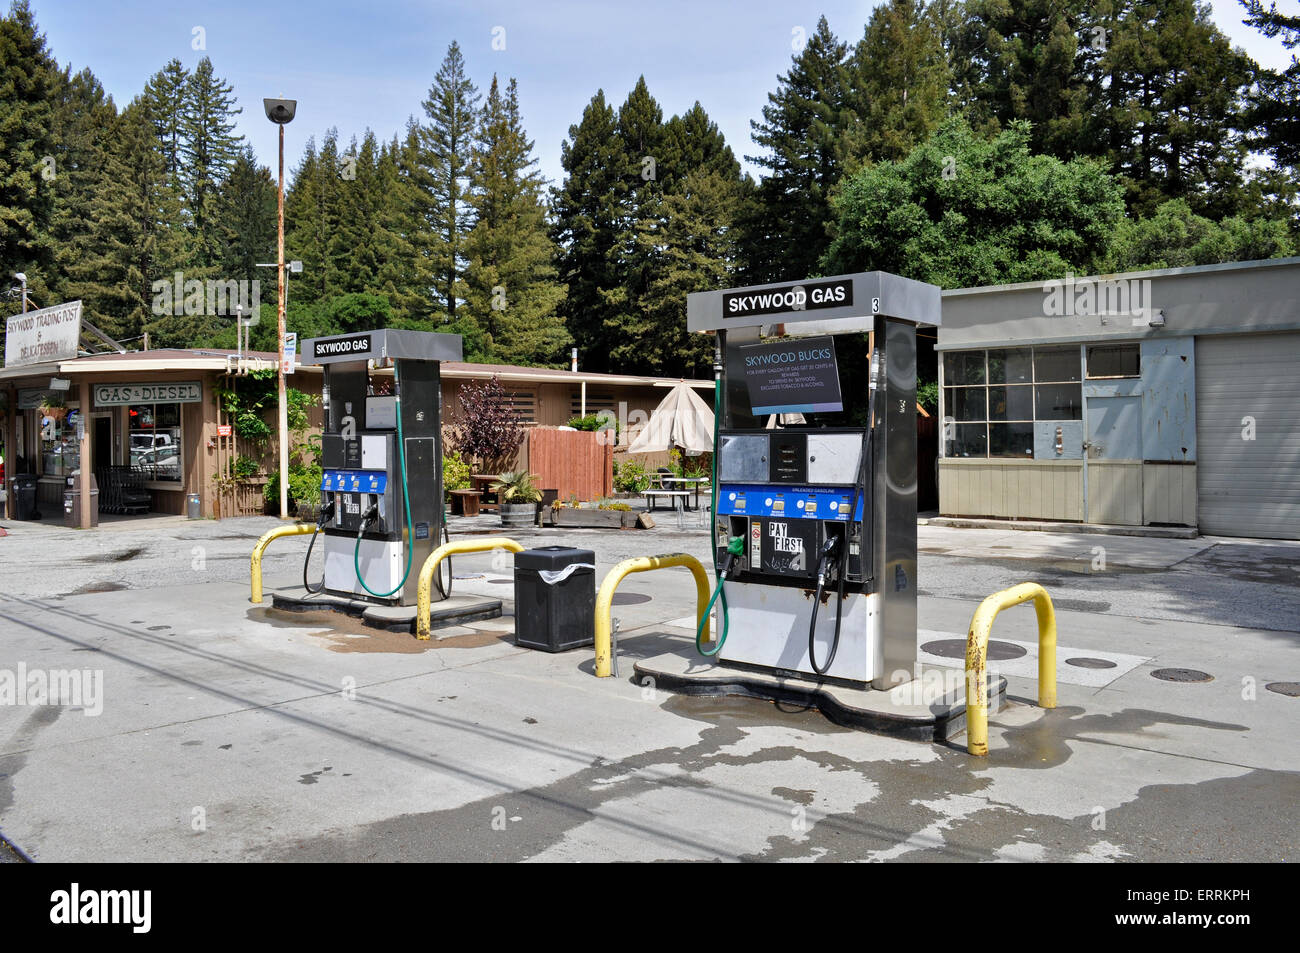 Pompes à essence, Skywood Trading Post, Woodside, Californie Banque D'Images